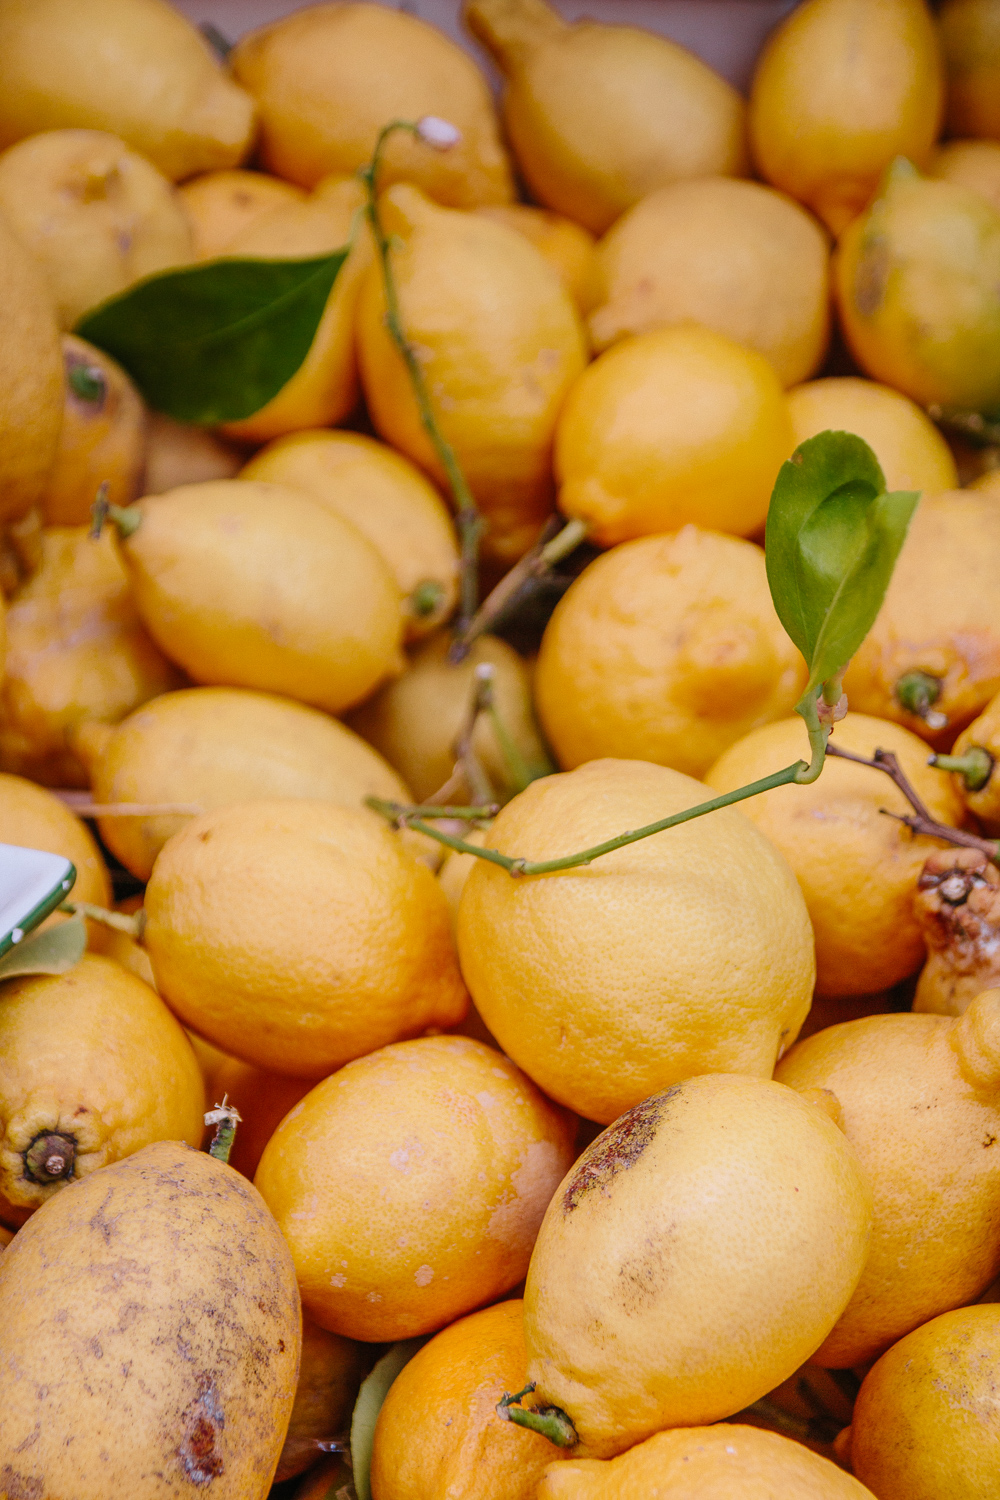 Lemons for Sale in Limone, Lake Garda